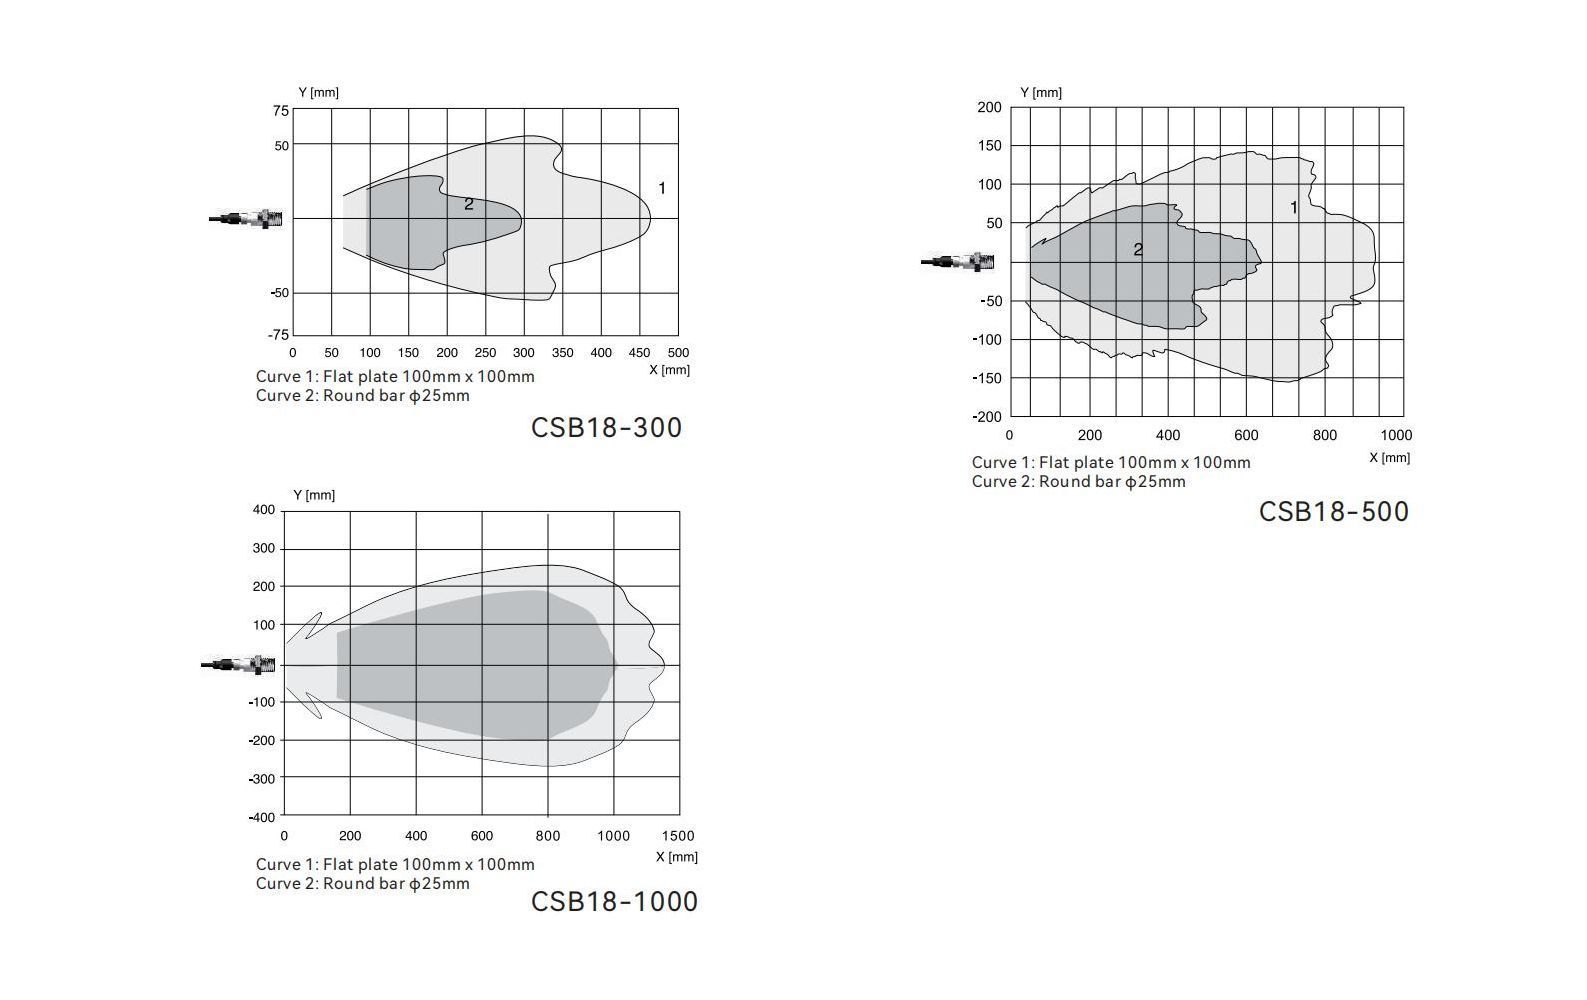 DADISICK Ultrasonic sensors CSB30 series Reference Curve